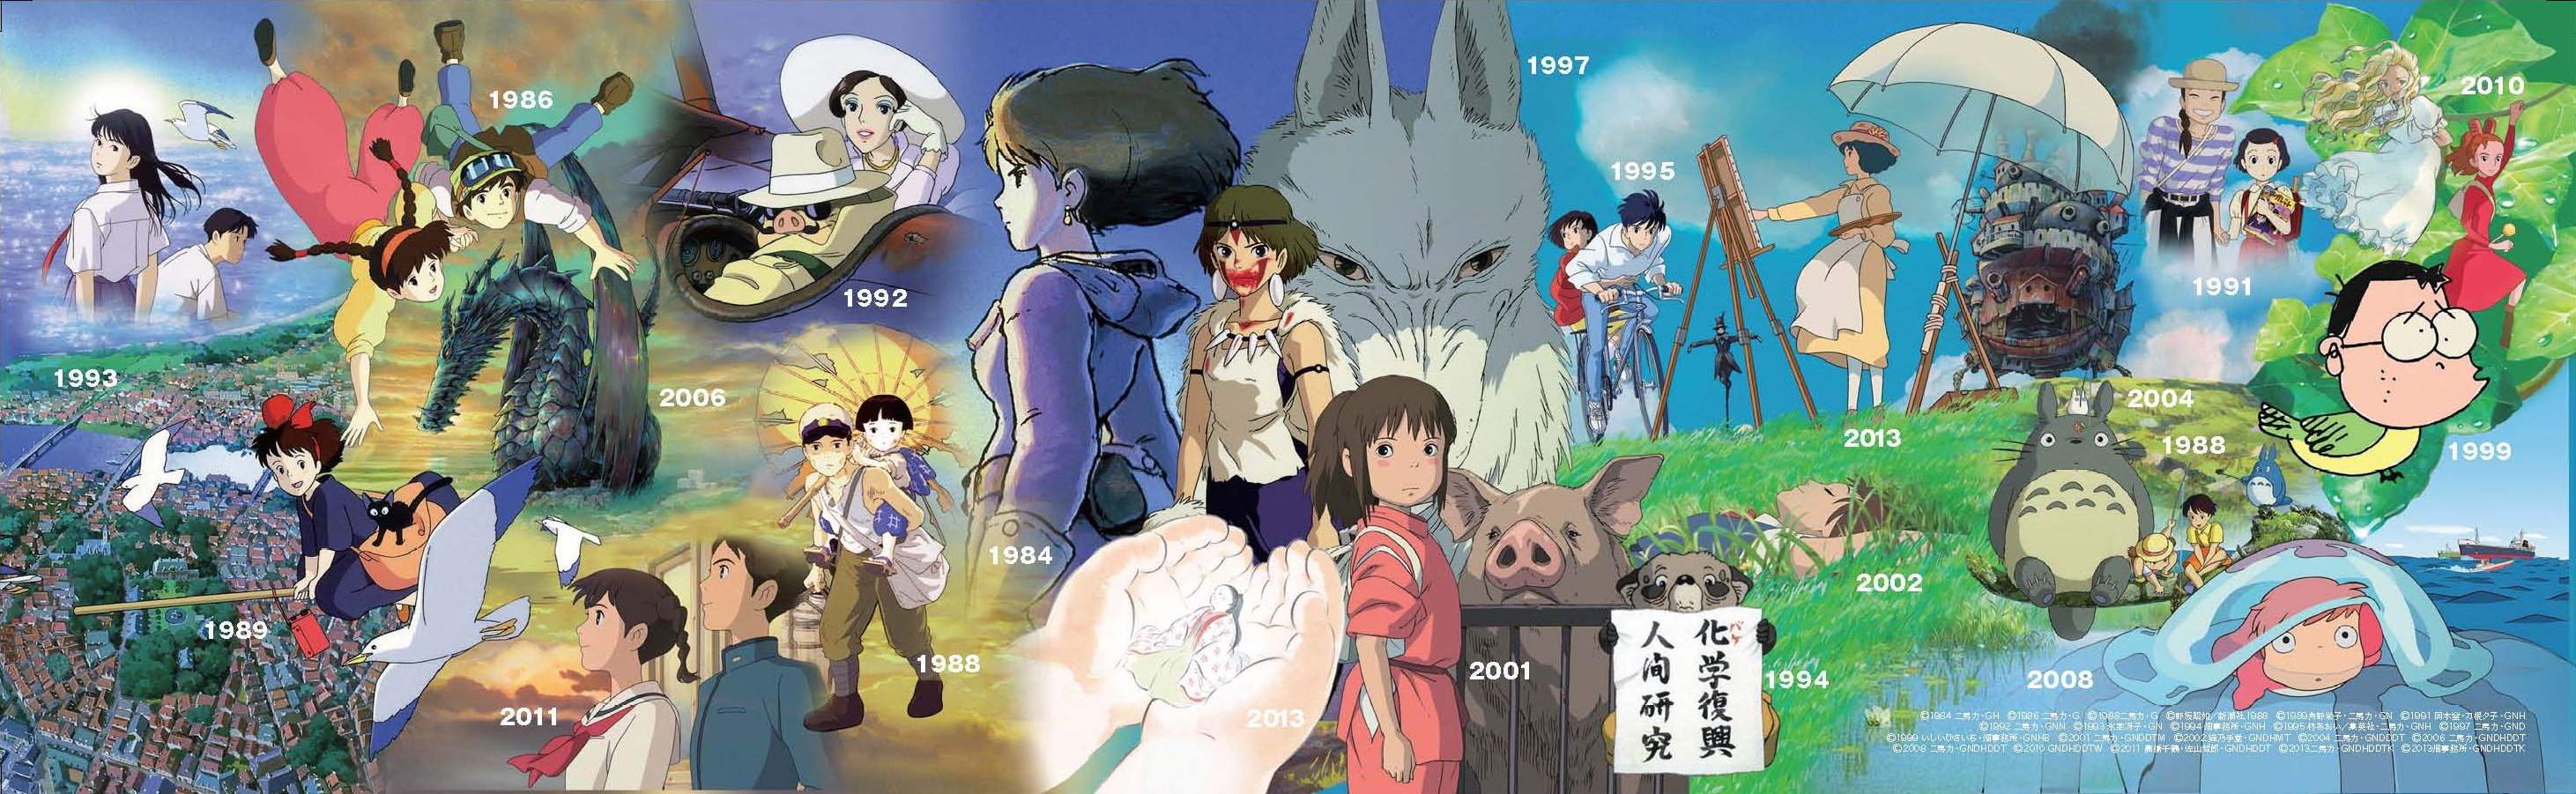 Theater Murals In Japan Showcase Ghibli Movies Animation Magazine